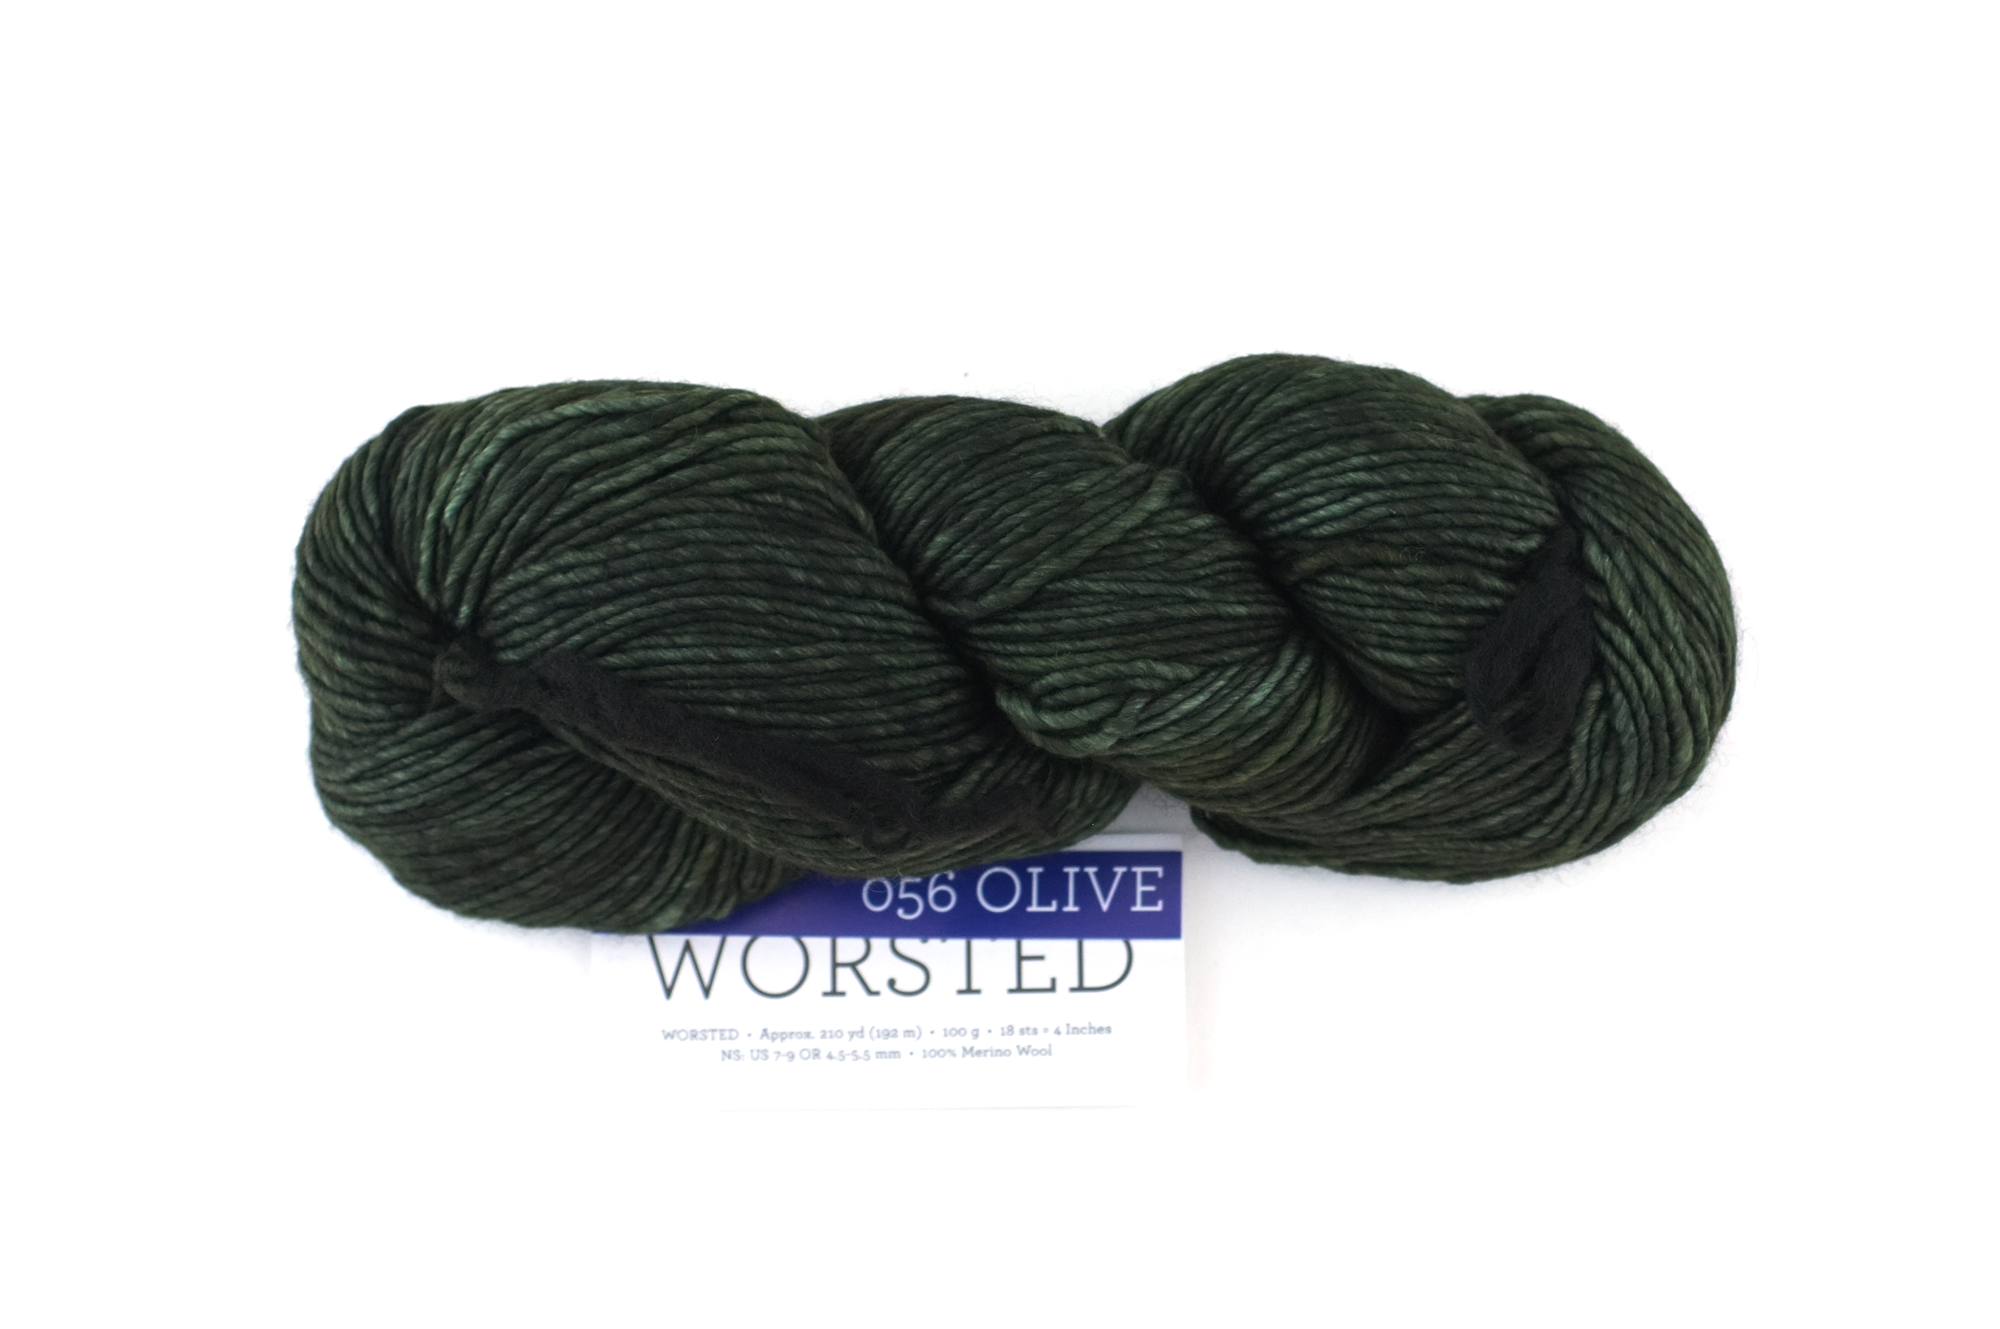 Botanical Color - Organic Wool, Naturally Dyed - Jagger Yarn